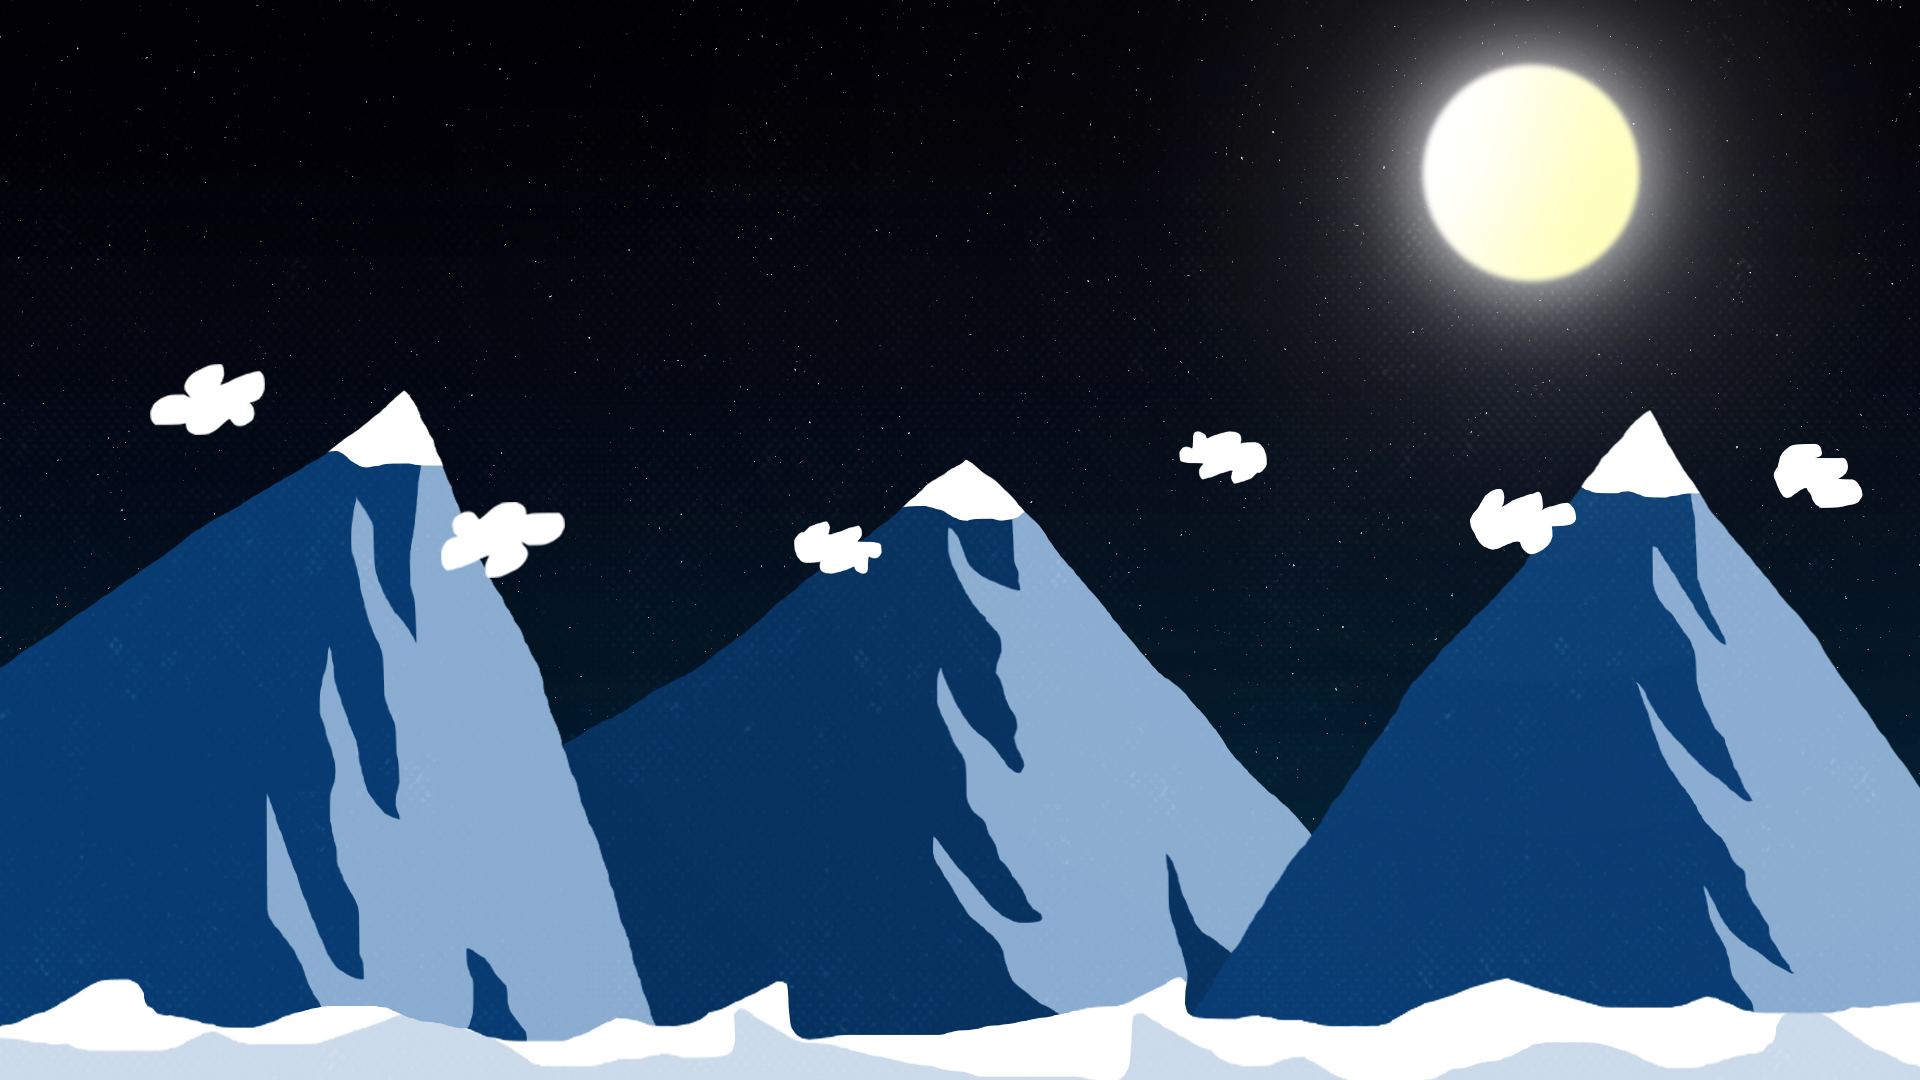 General 1920x1080 graphic design minimalism artwork landscape mountains night starry night